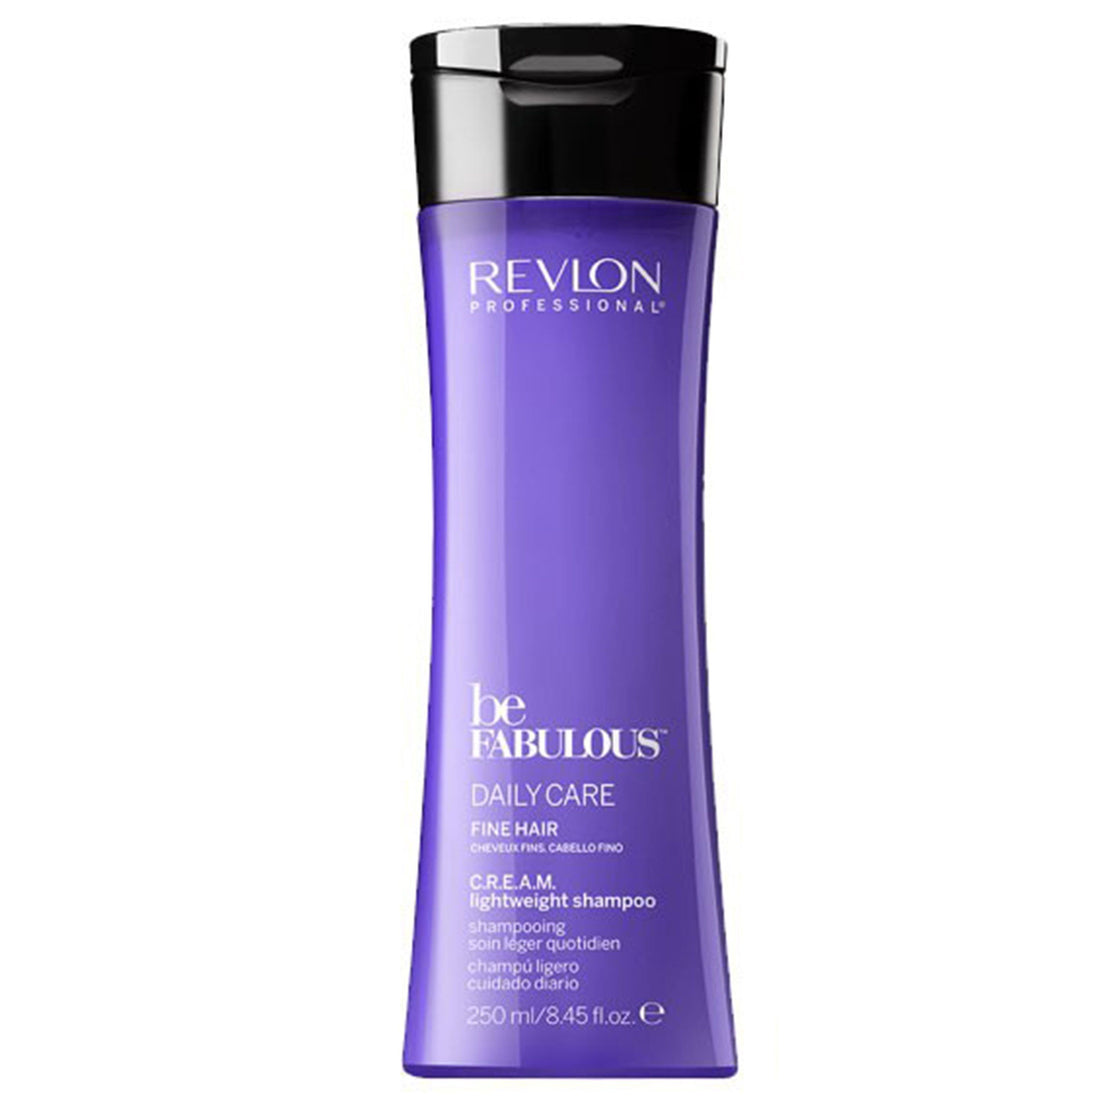 Buy Revlon Professional Be Fabulous Daily Care Lightweight Shampoo 250ml on HairMNL